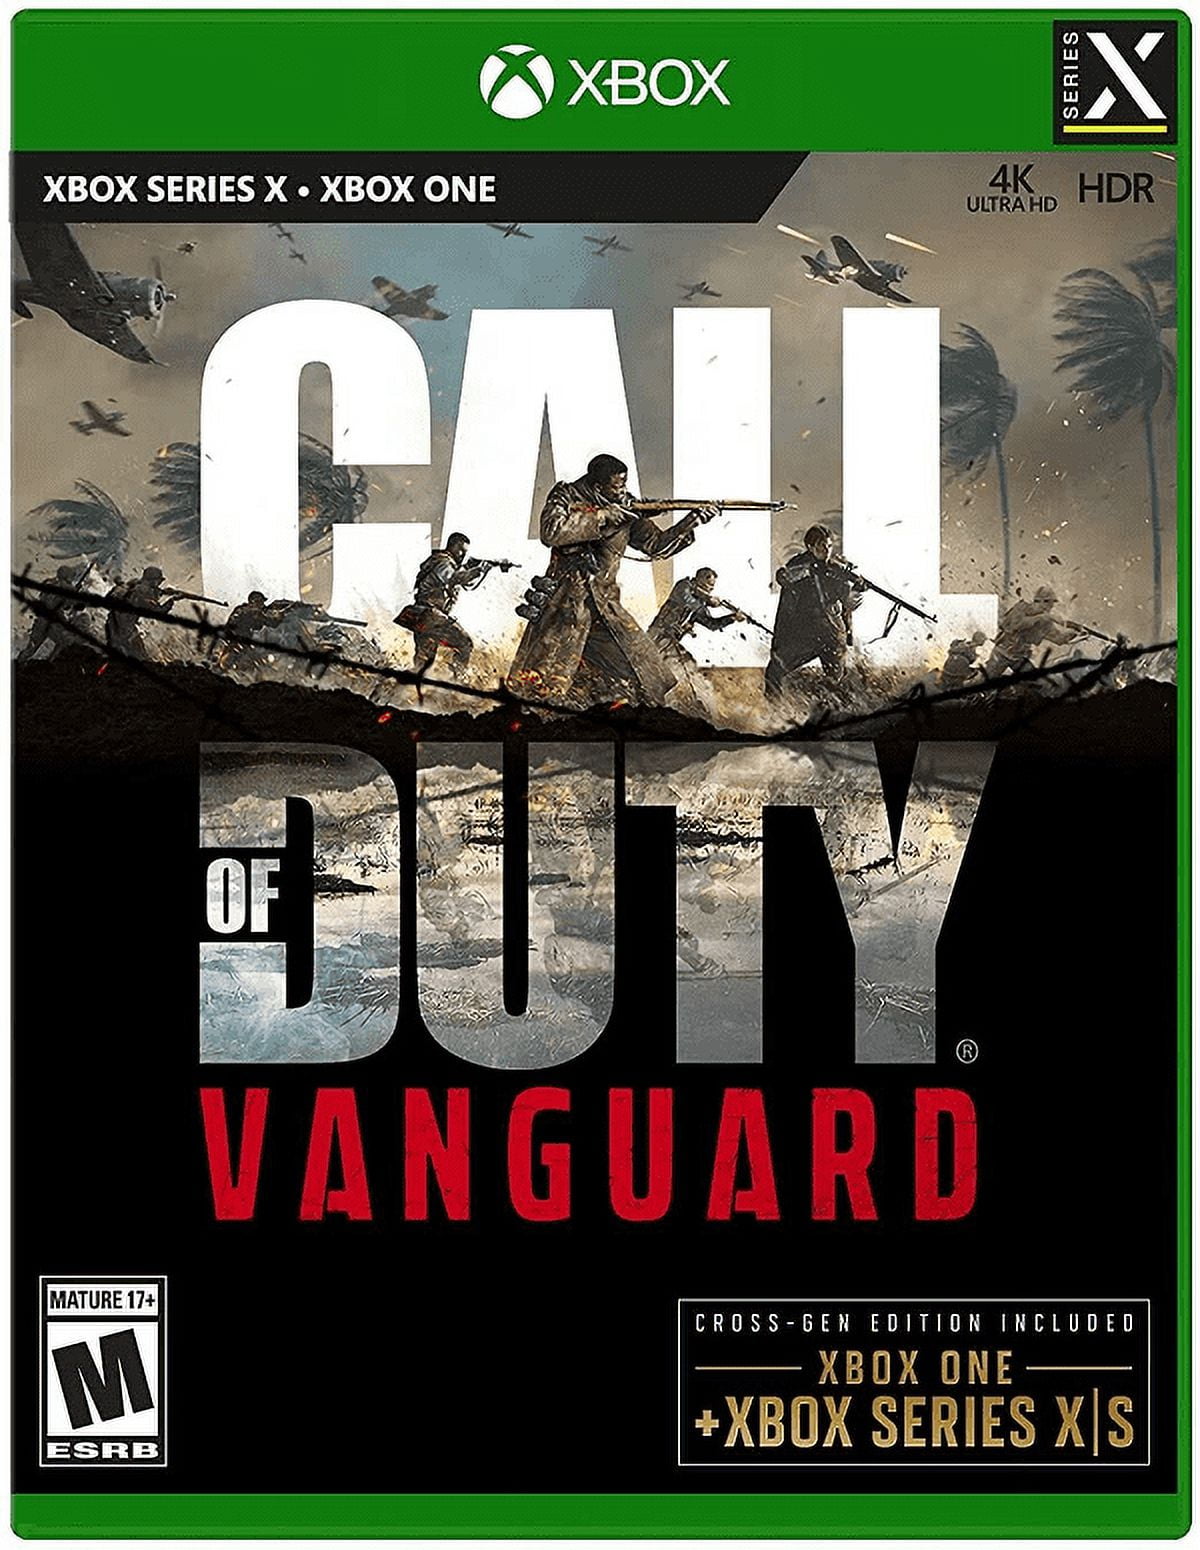 Call of Duty WWII – PC vs. PS4 vs. Xbox One Graphics Comparison